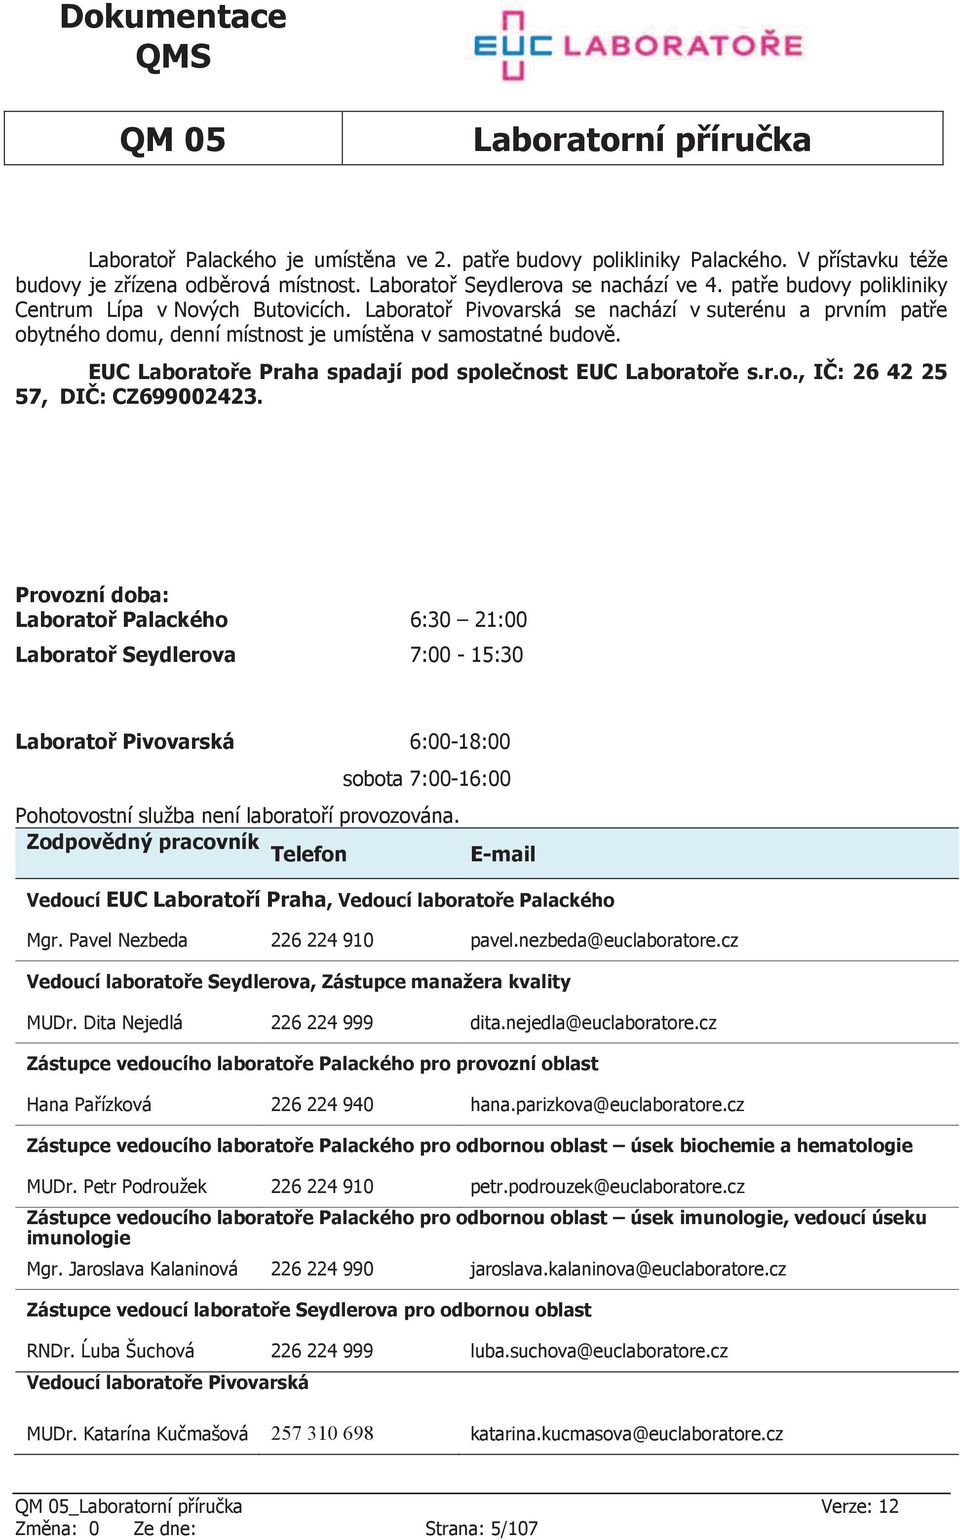 EUC Laboratoře Praha spadají pod společnost EUC Laboratoře s.r.o., IČ: 26 42 25 57, DIČ: CZ699002423.